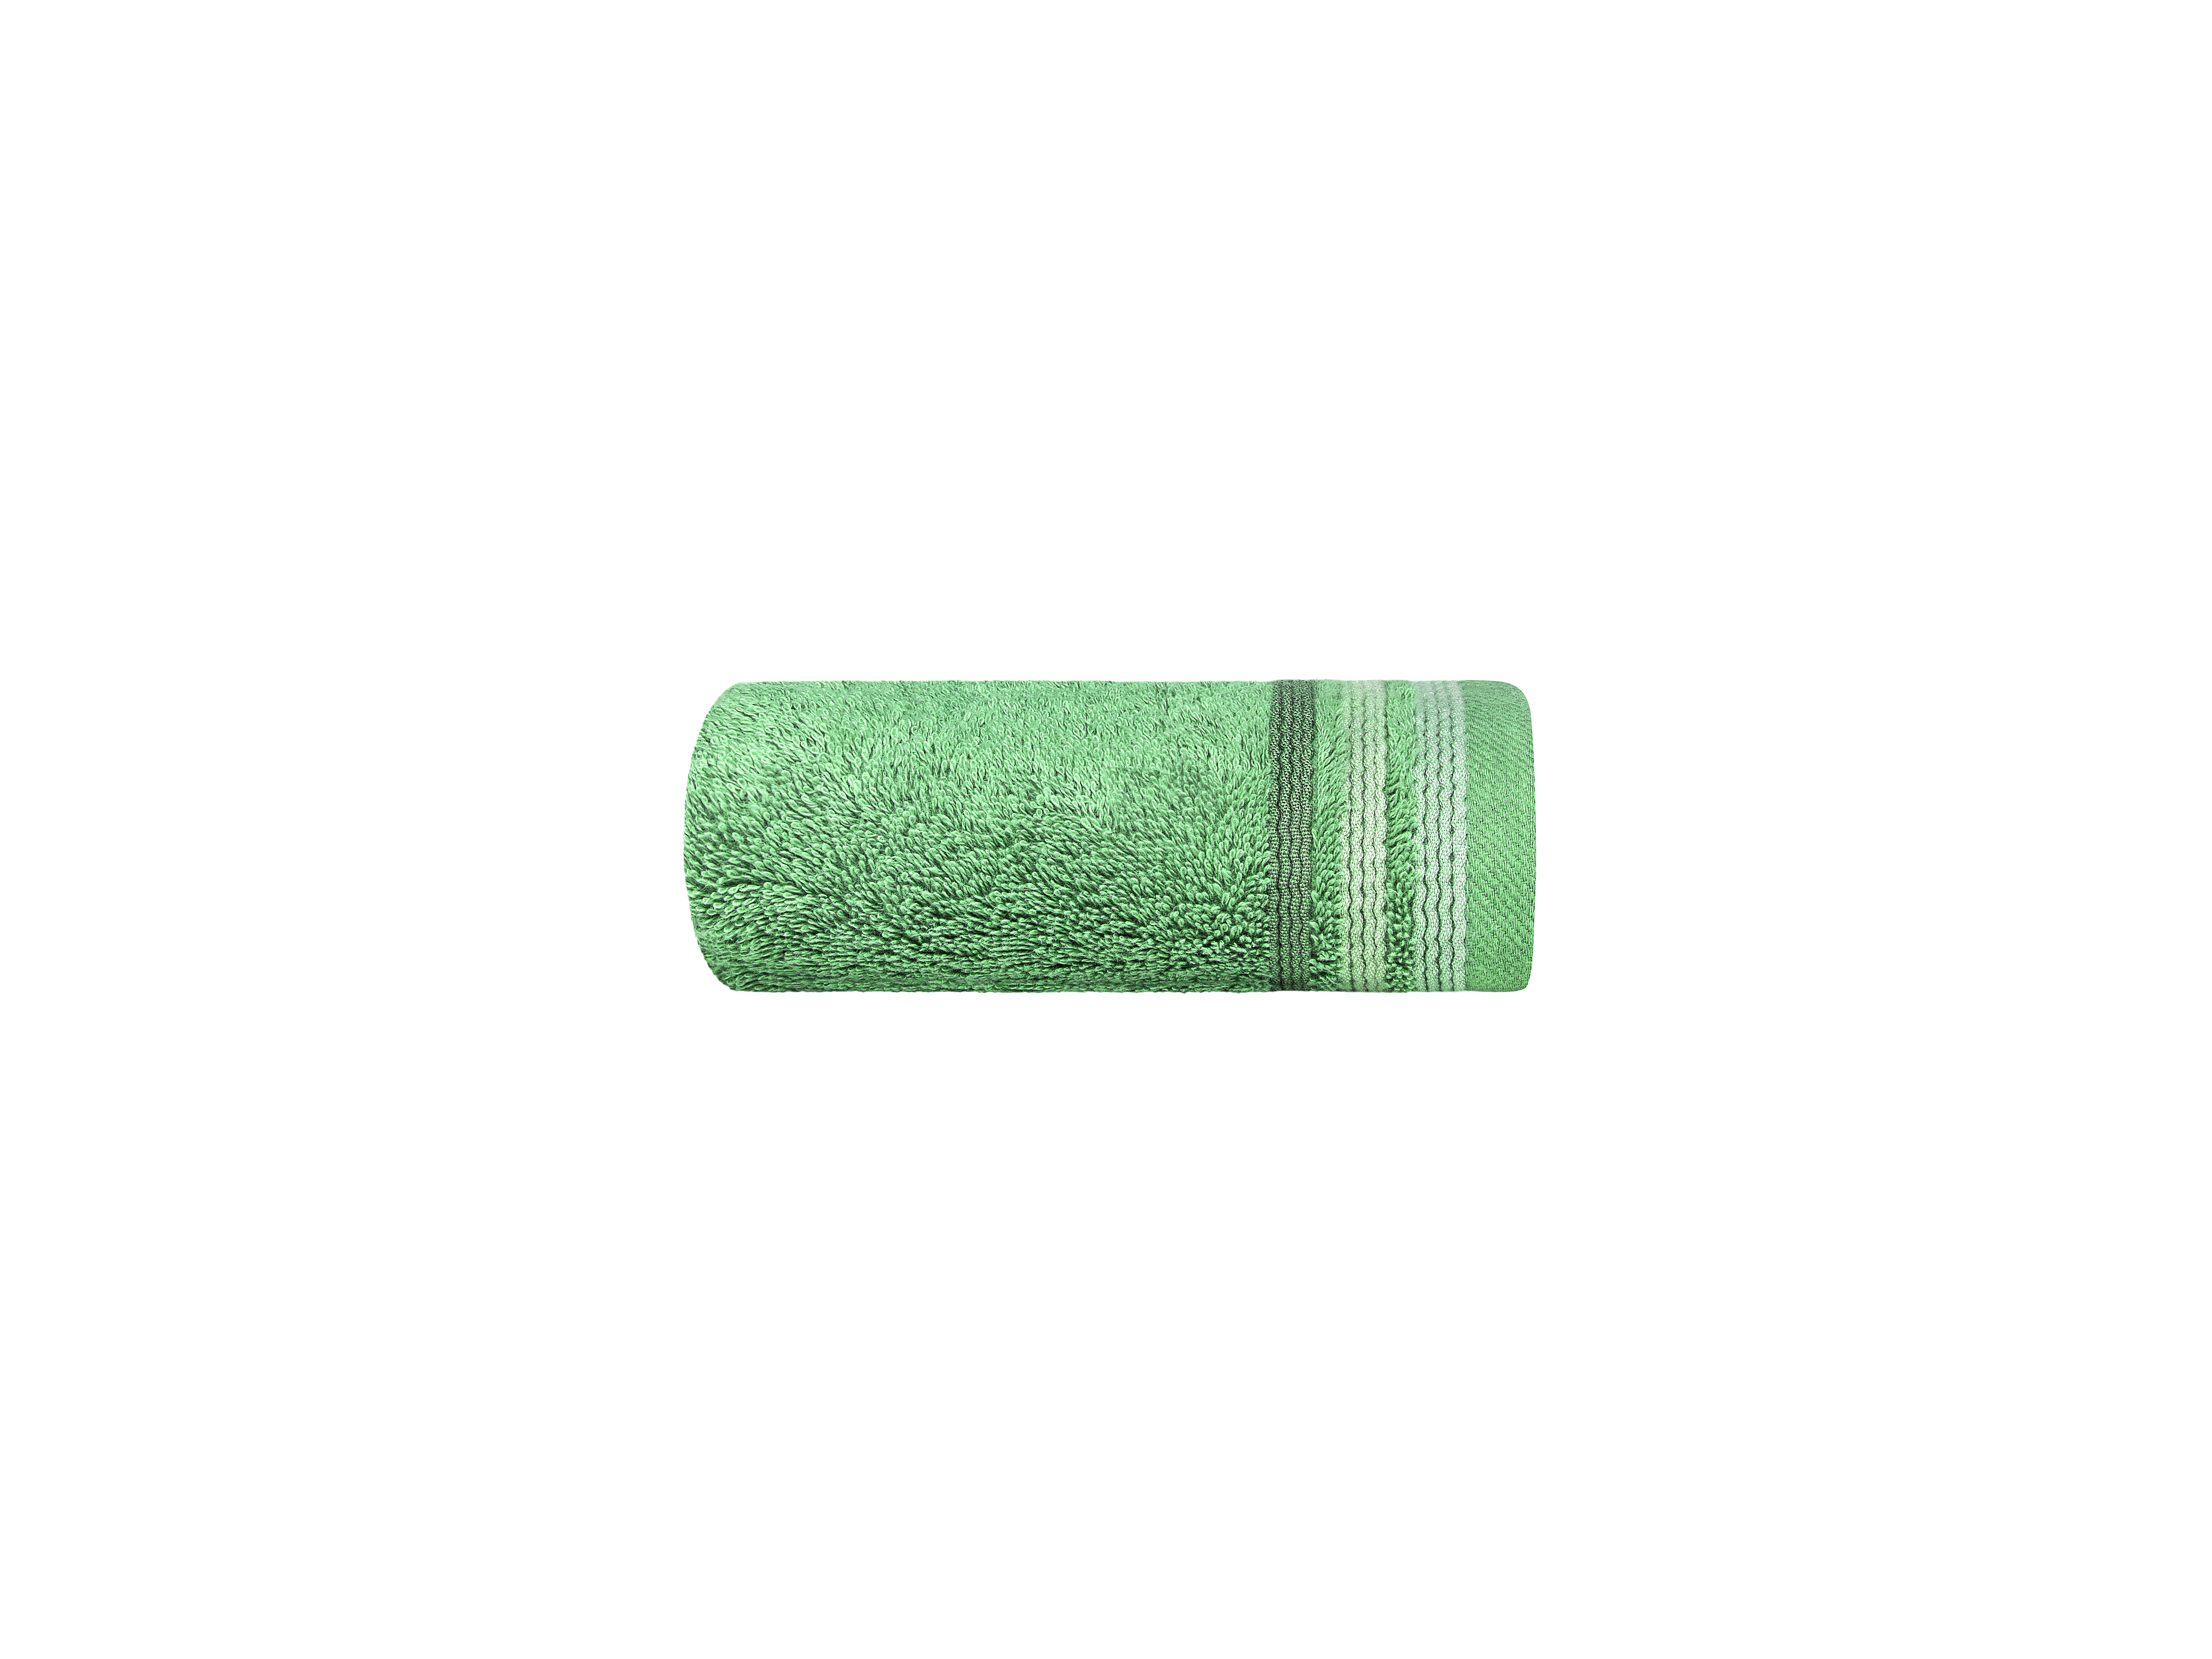 Полотенце Эспозито Цвет: Зеленый (40х60 см), размер 40х60 см eta356758 Полотенце Эспозито Цвет: Зеленый (40х60 см) - фото 1